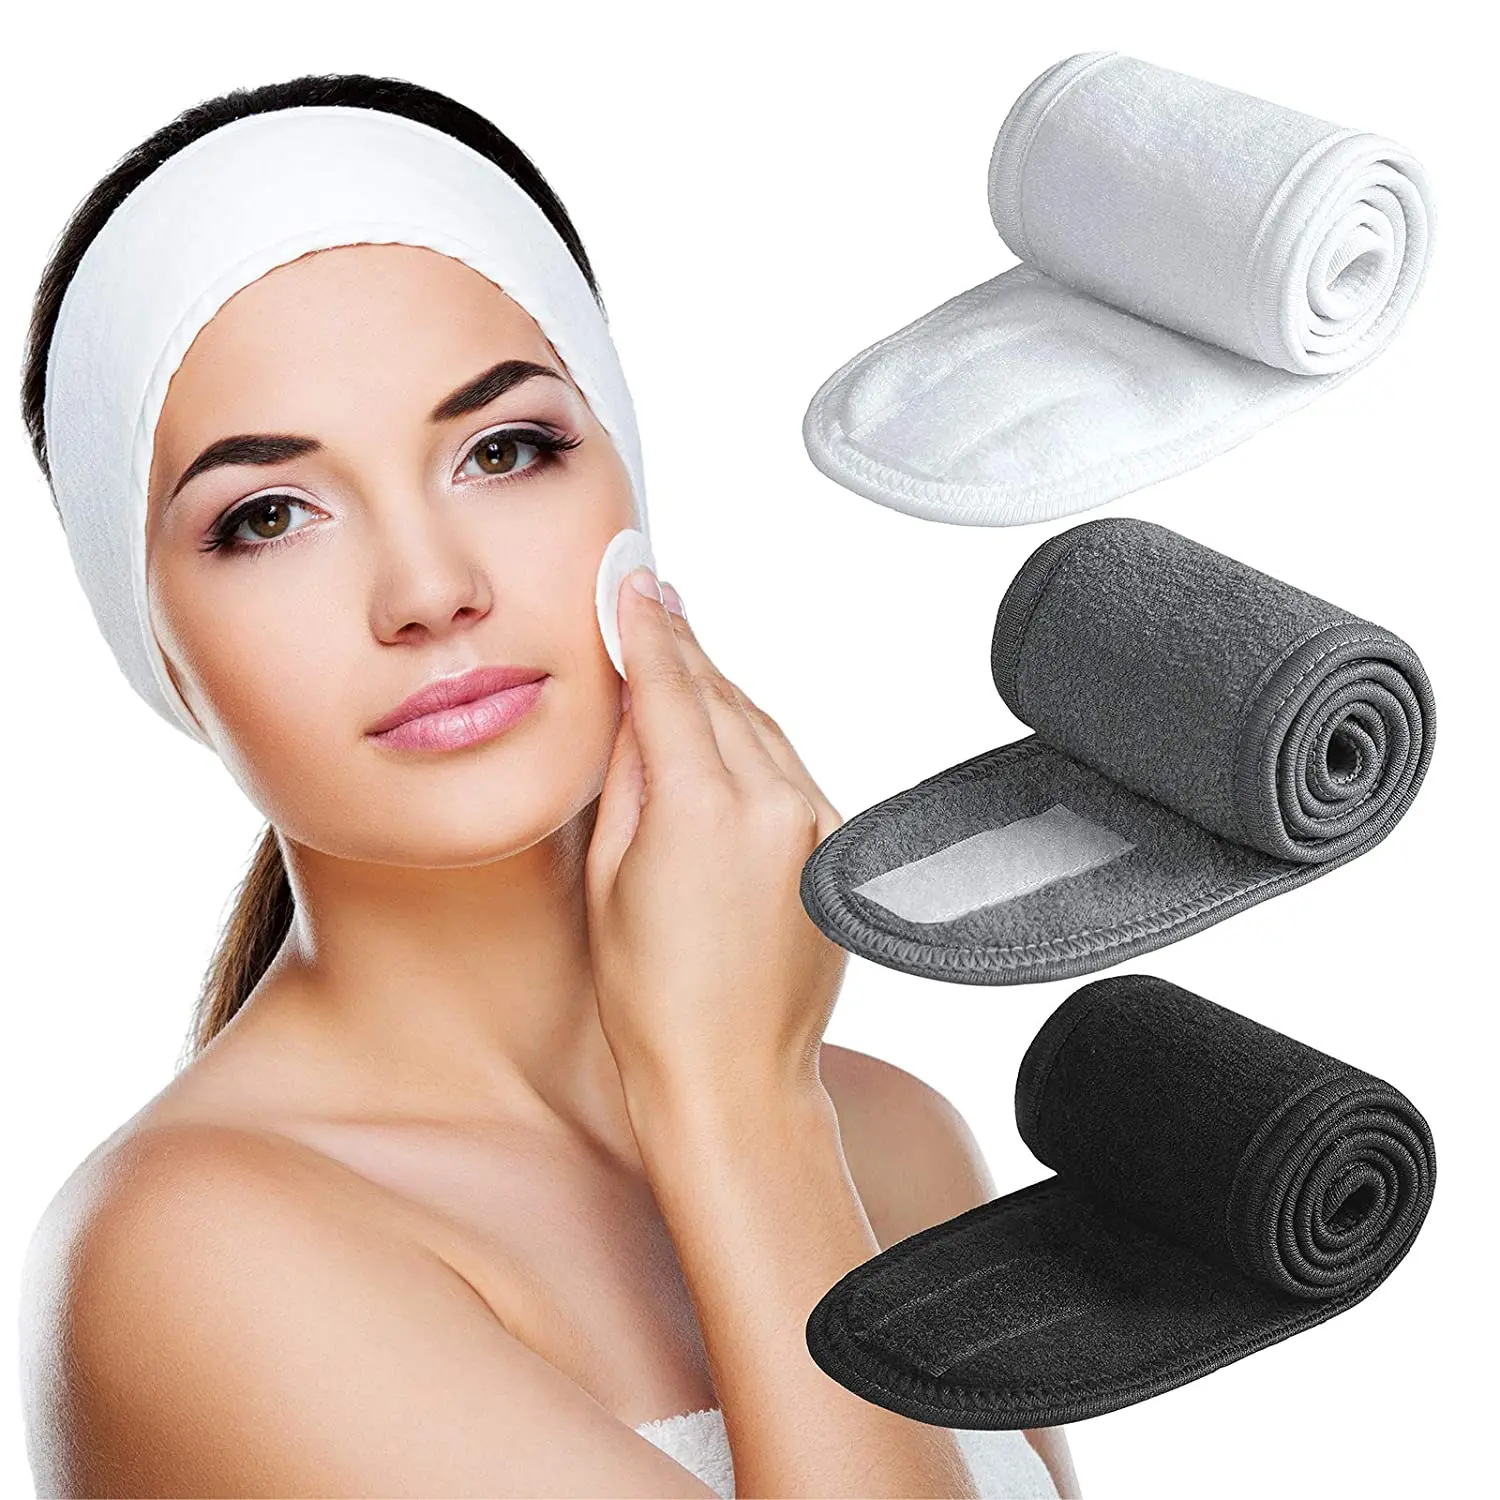 Spa Headband - 3 Pack Ultra Soft Adjustable Face Wash Headband Terry Cloth Stretch Make Up Wrap for Face Washing, Shower, Yoga зауженные брюки из нейлона ultra stretch uniqlo